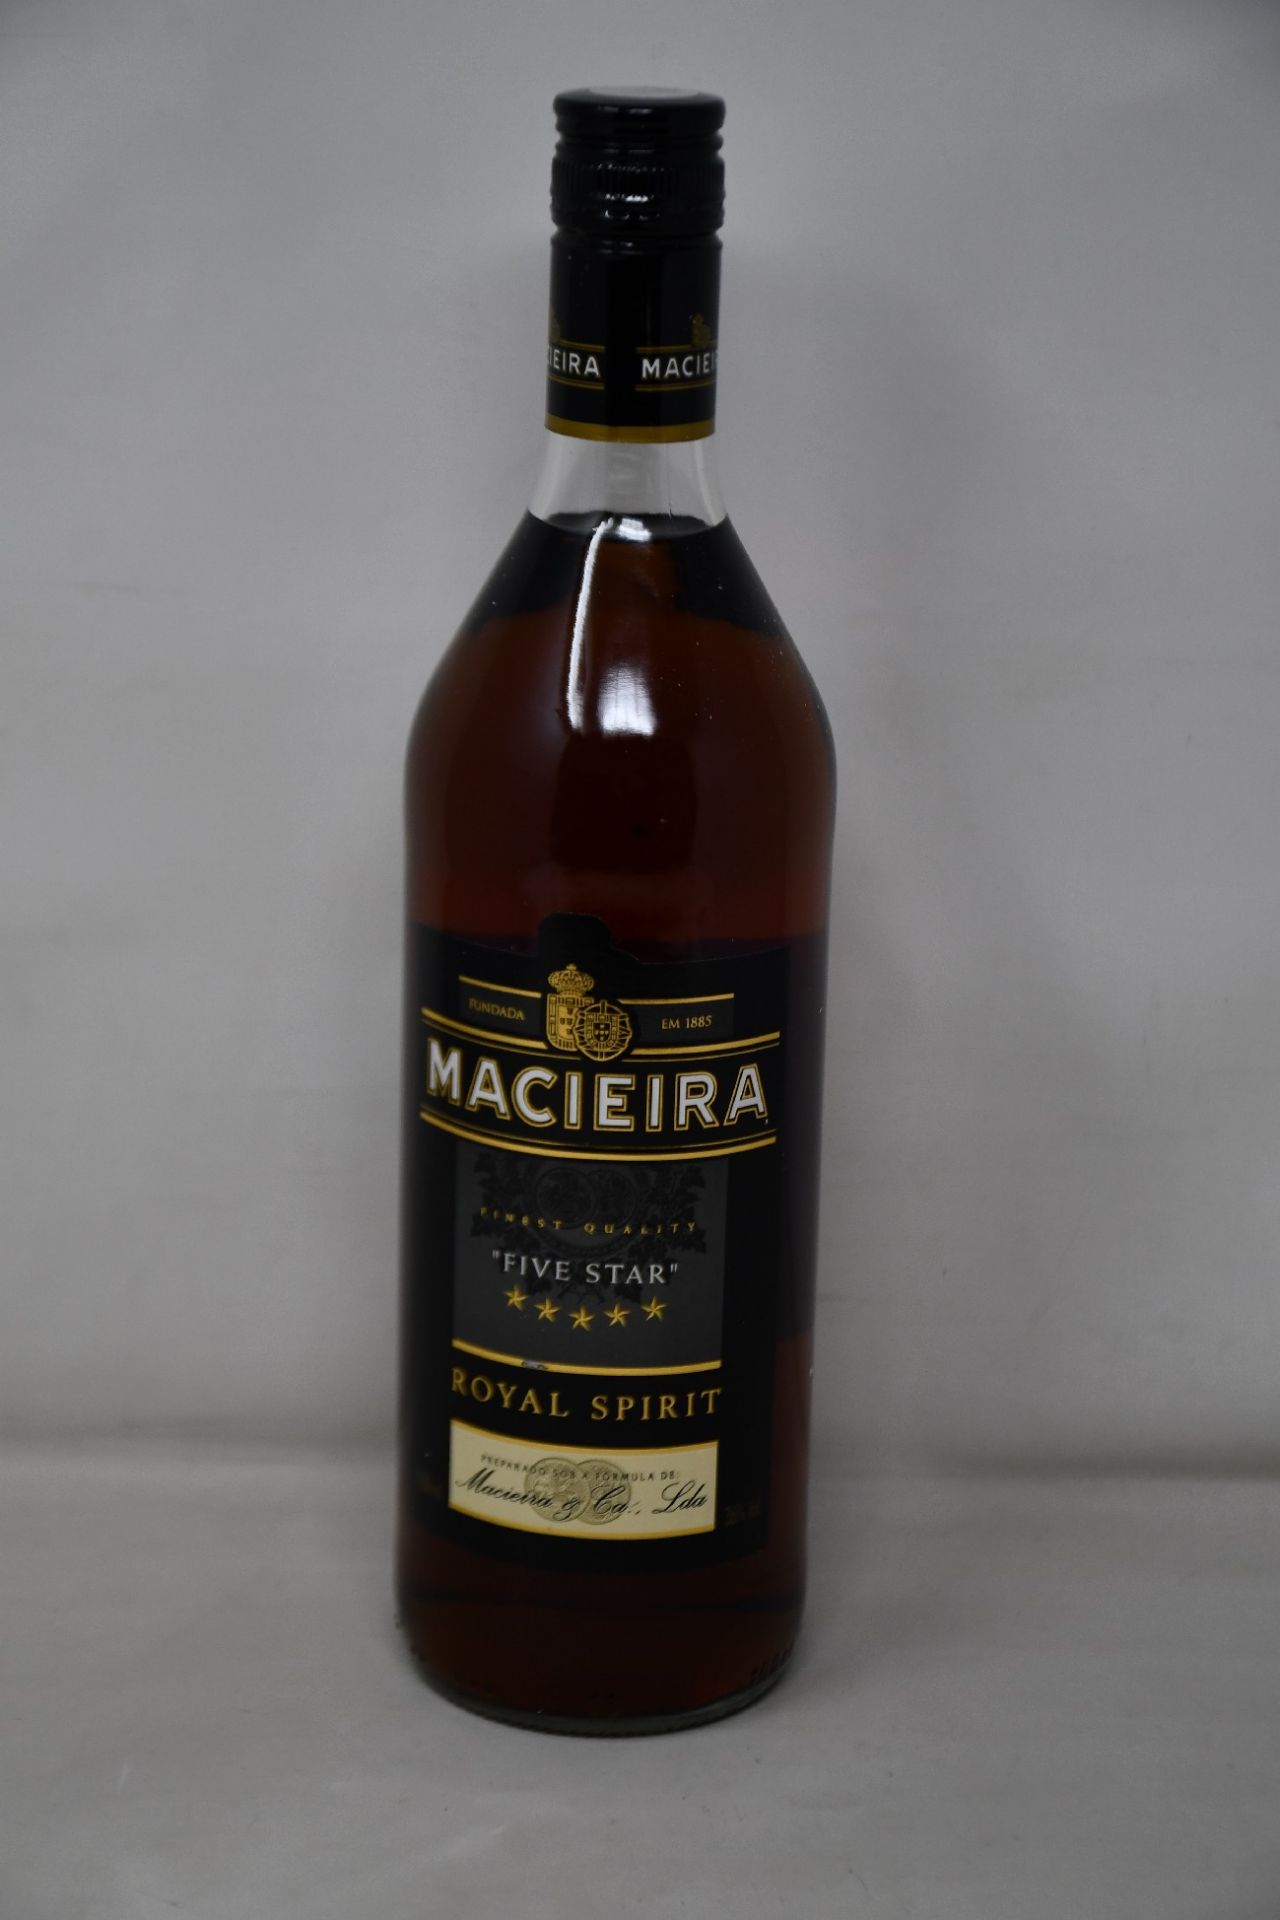 Ten bottles of Macieira Five Star Royal Spirit brandy (1ltr) (Over 18s only).